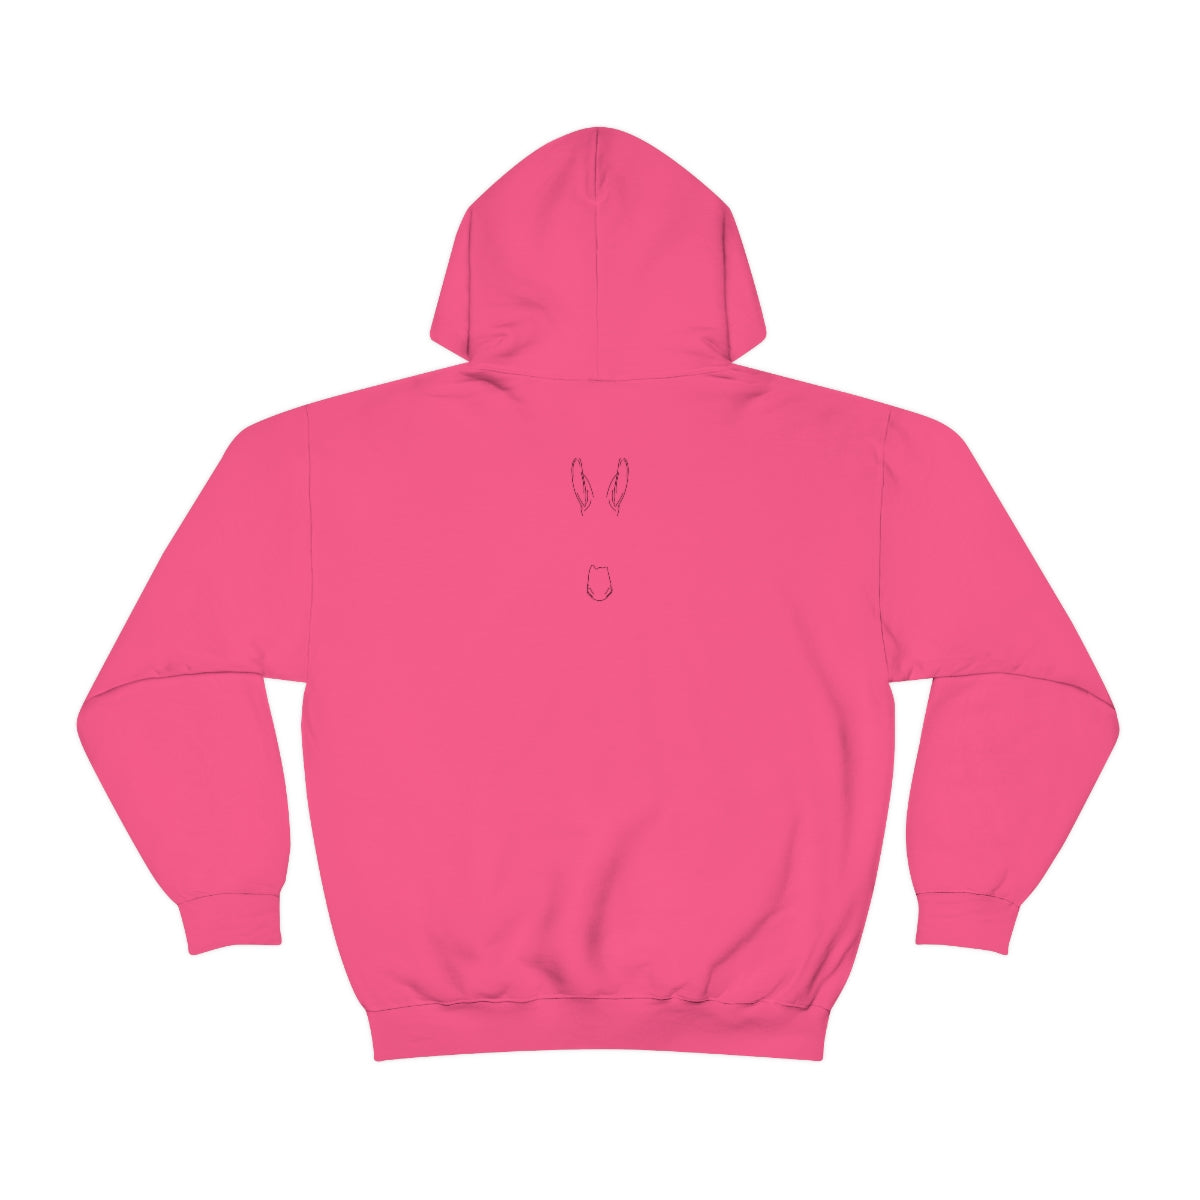 Monte the Singing Donkey Summer Cut Unisex Heavy Blend™ Hooded Sweatshirt (S-5XL)